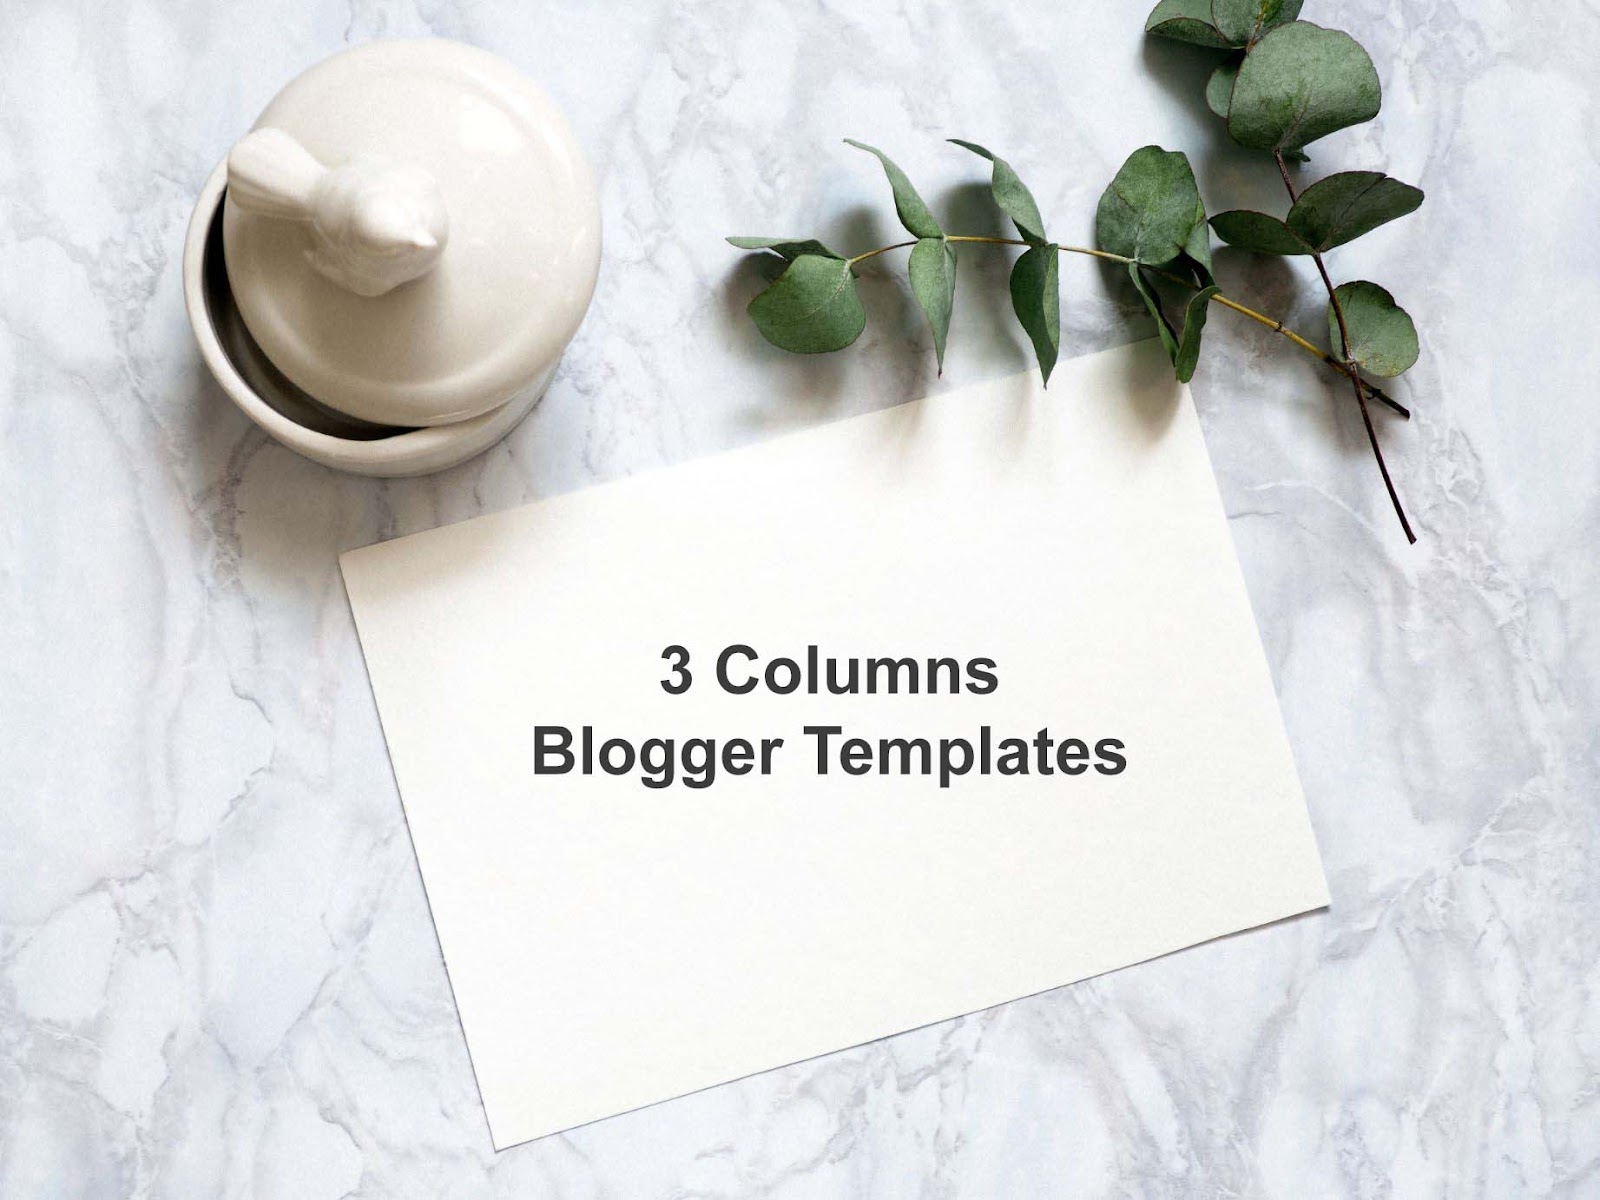 3 Columns Blogger Templates